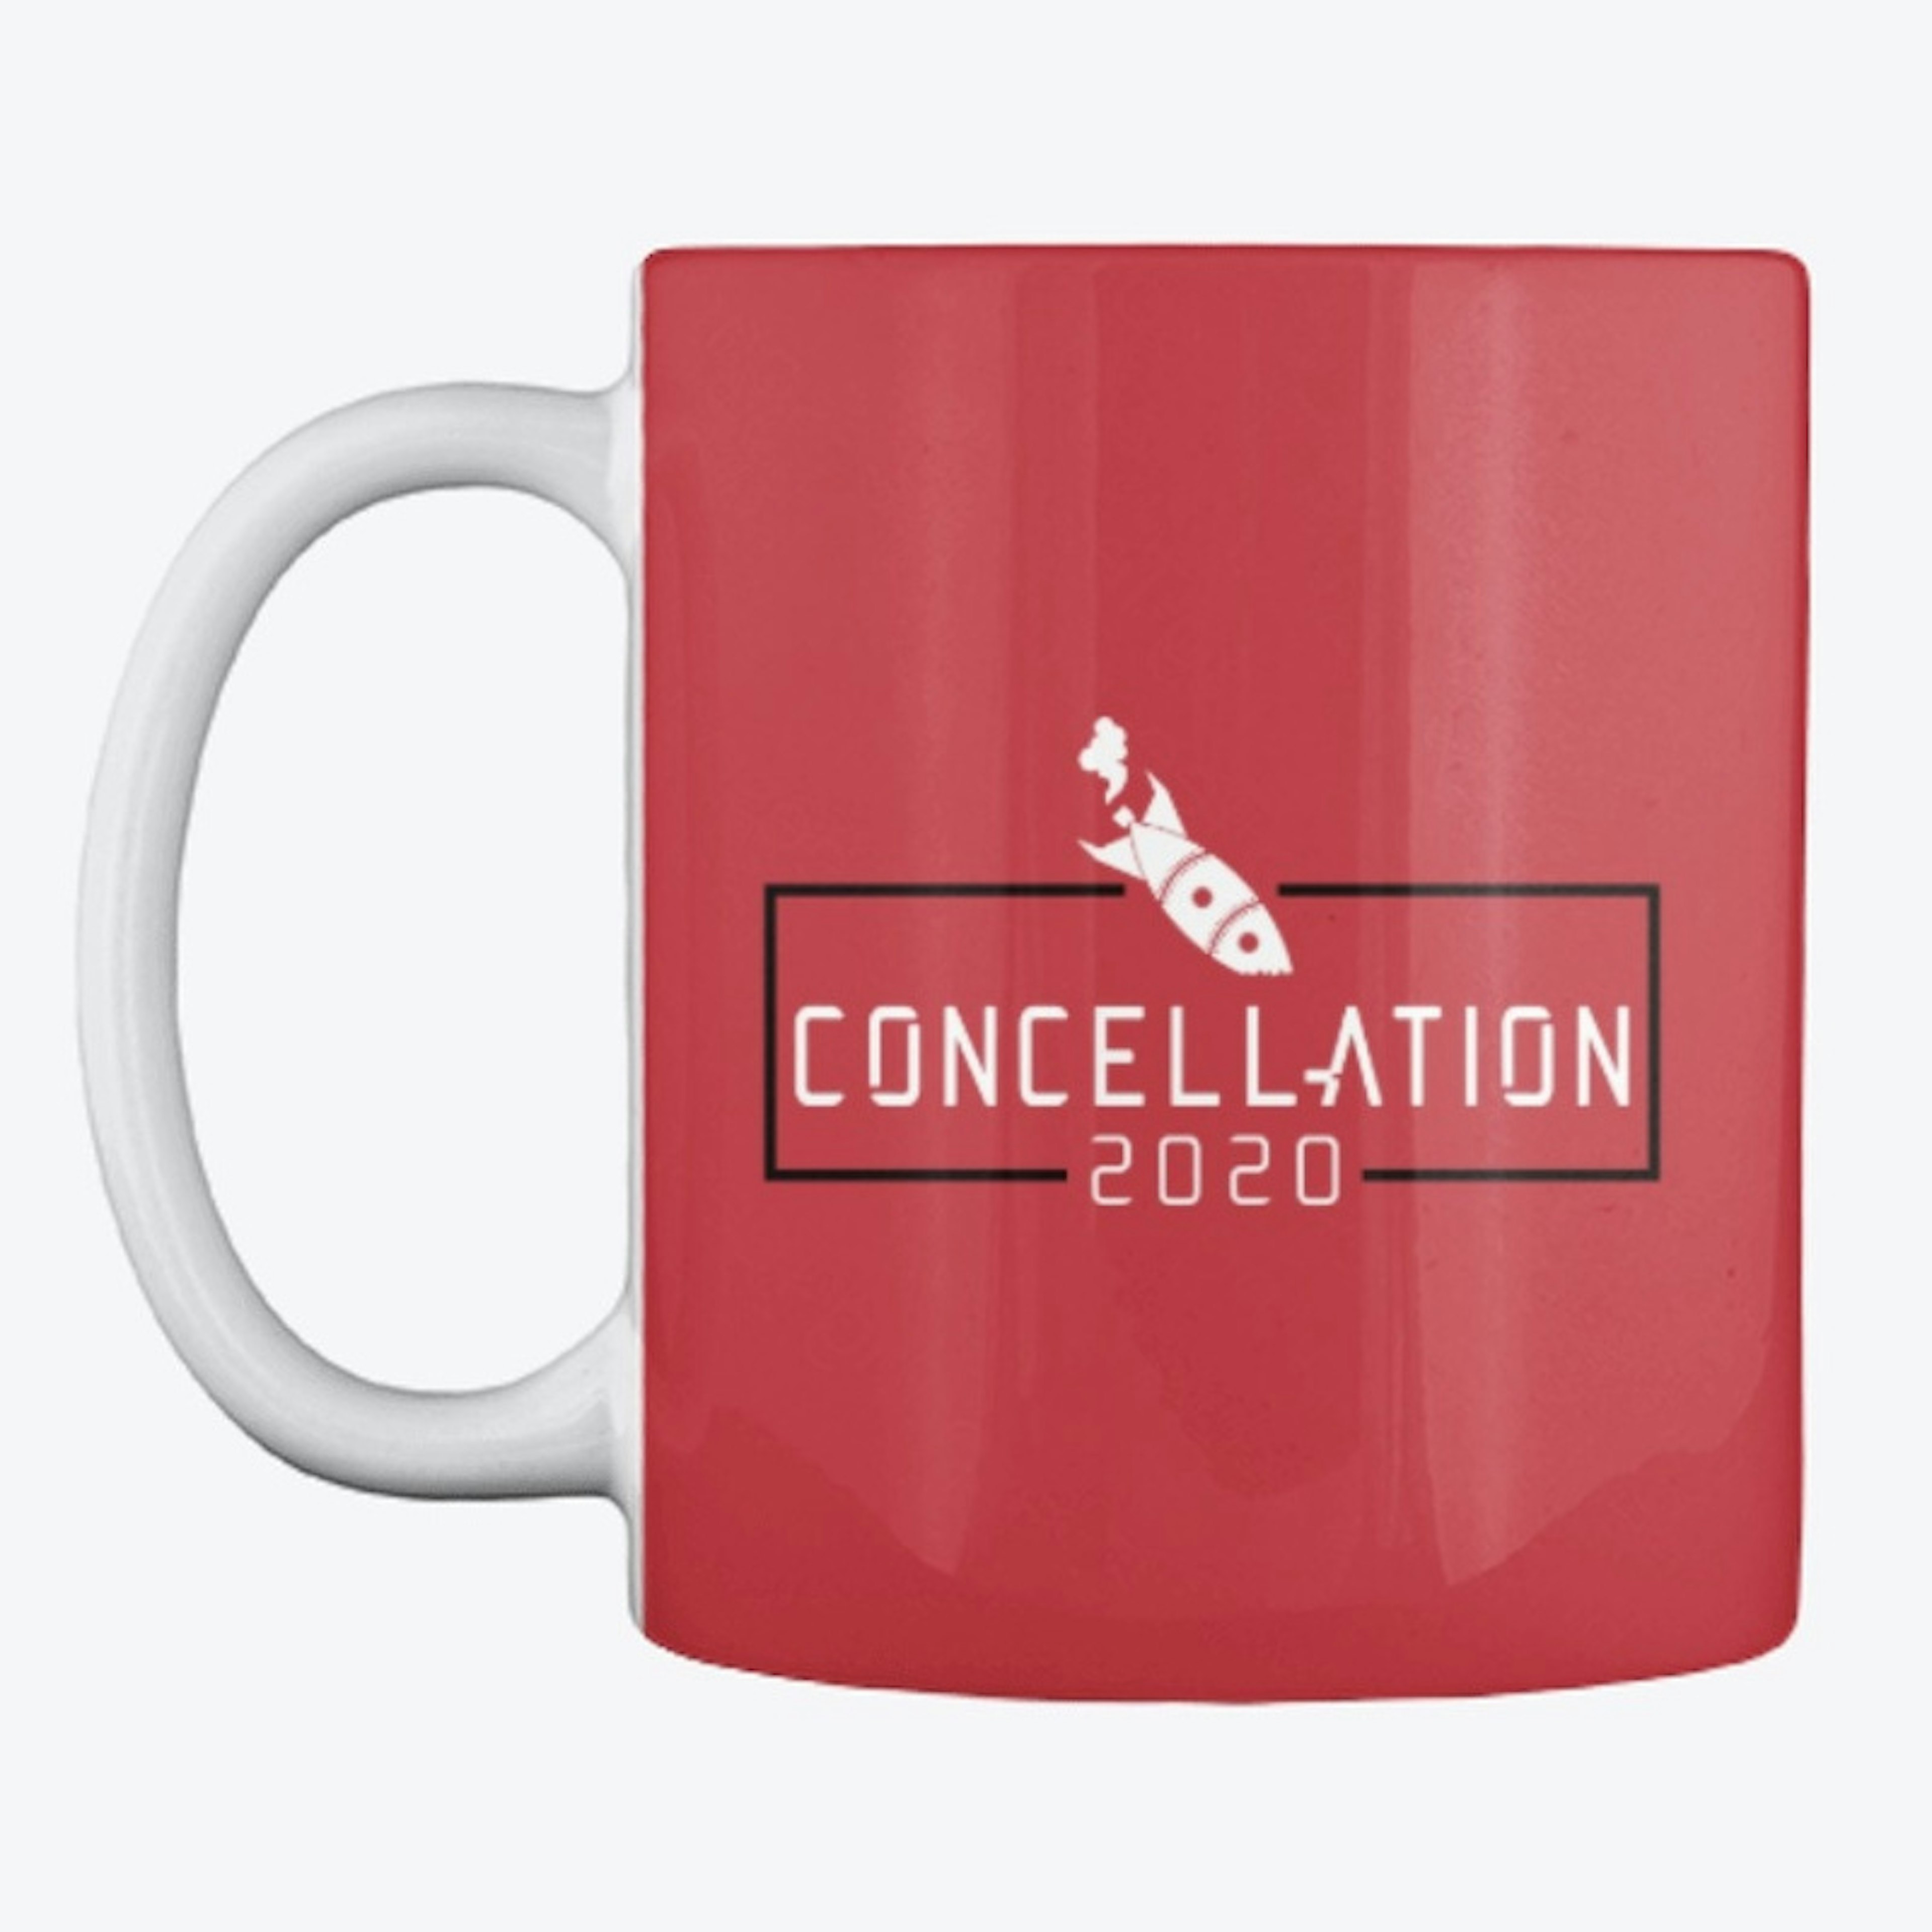 Concellation 2020 RedShirt